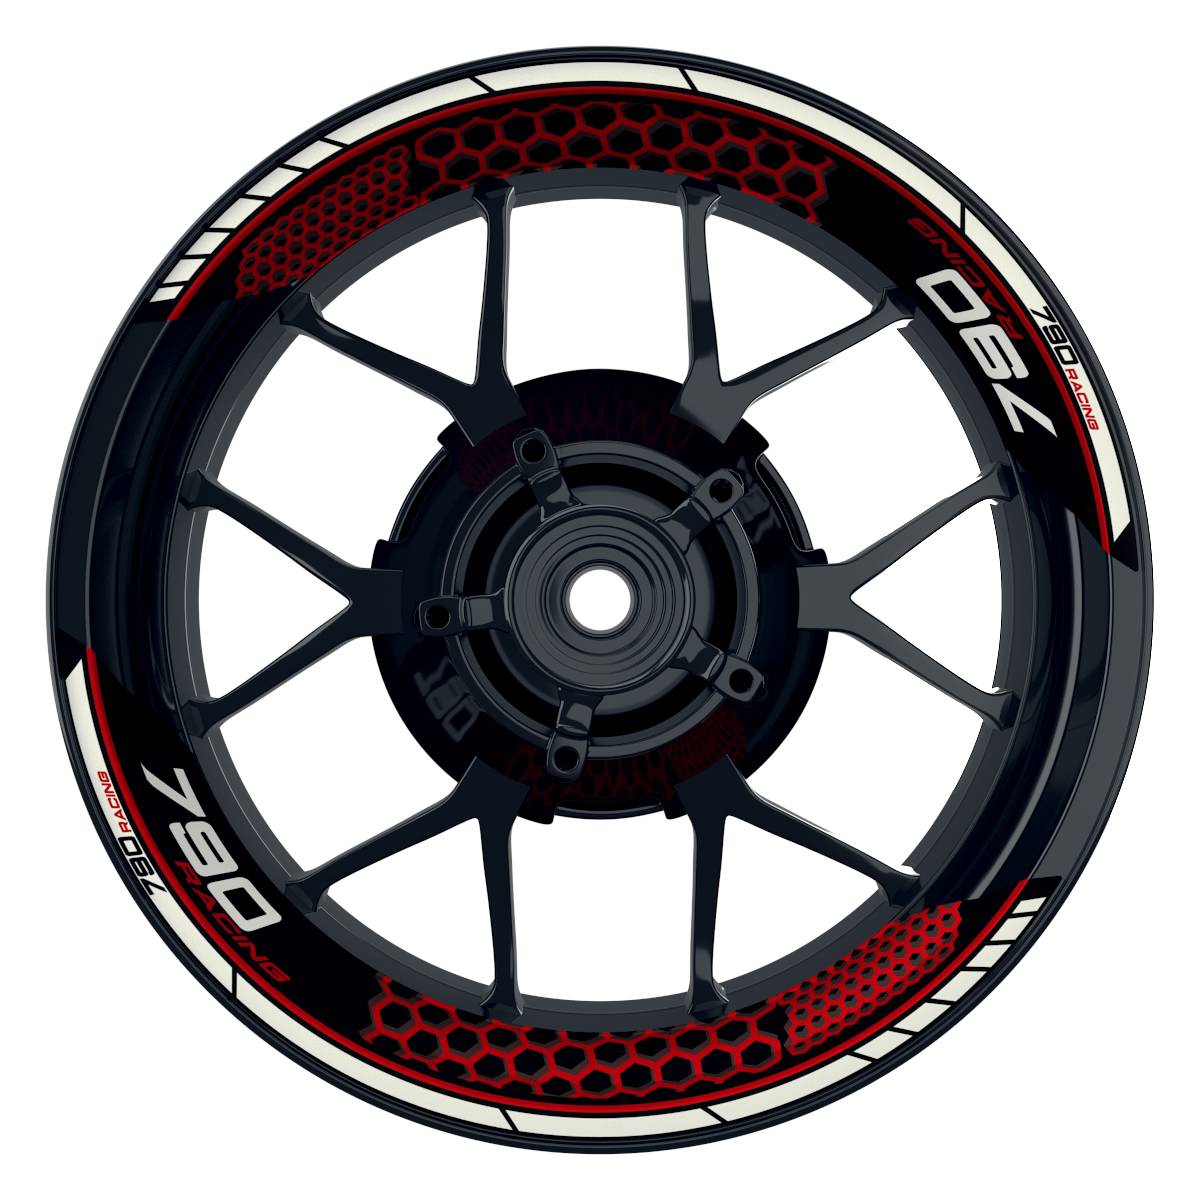 KTM Racing 790 Hexagon schwarz rot Frontansicht